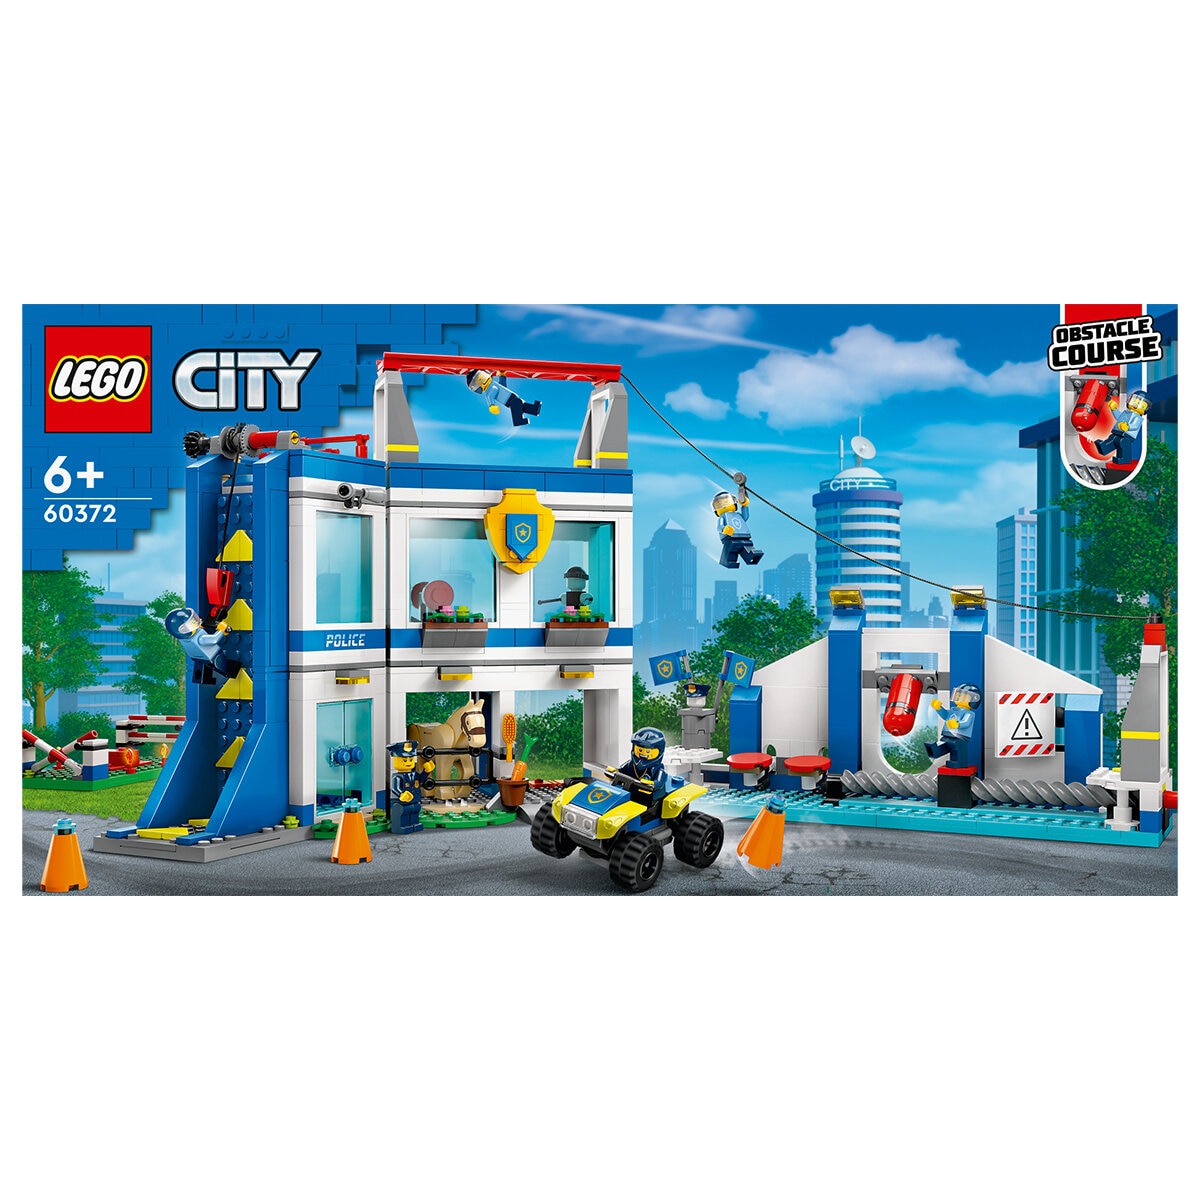 LEGO City Police Training Academy 60379